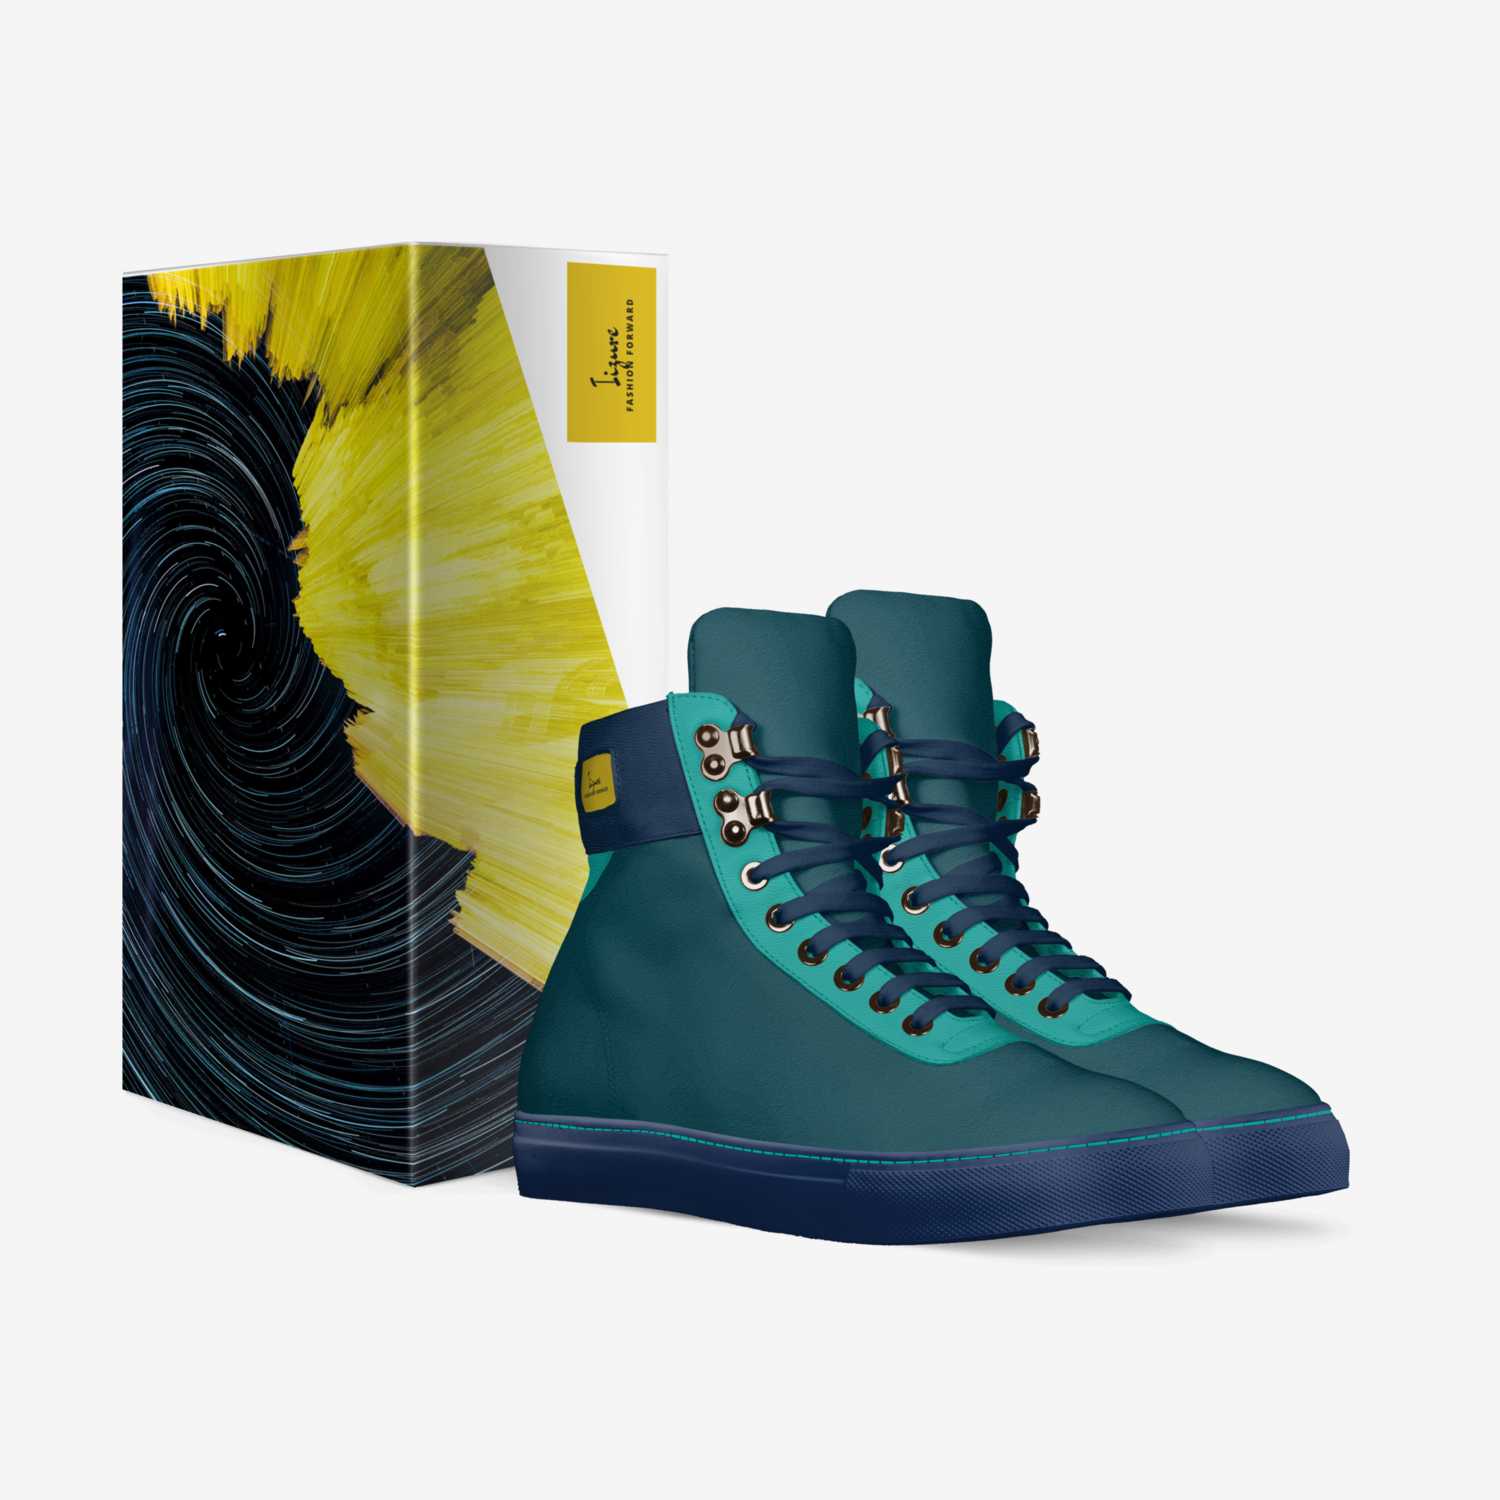 Iizure  custom made in Italy shoes by Shameka Johnson | Box view